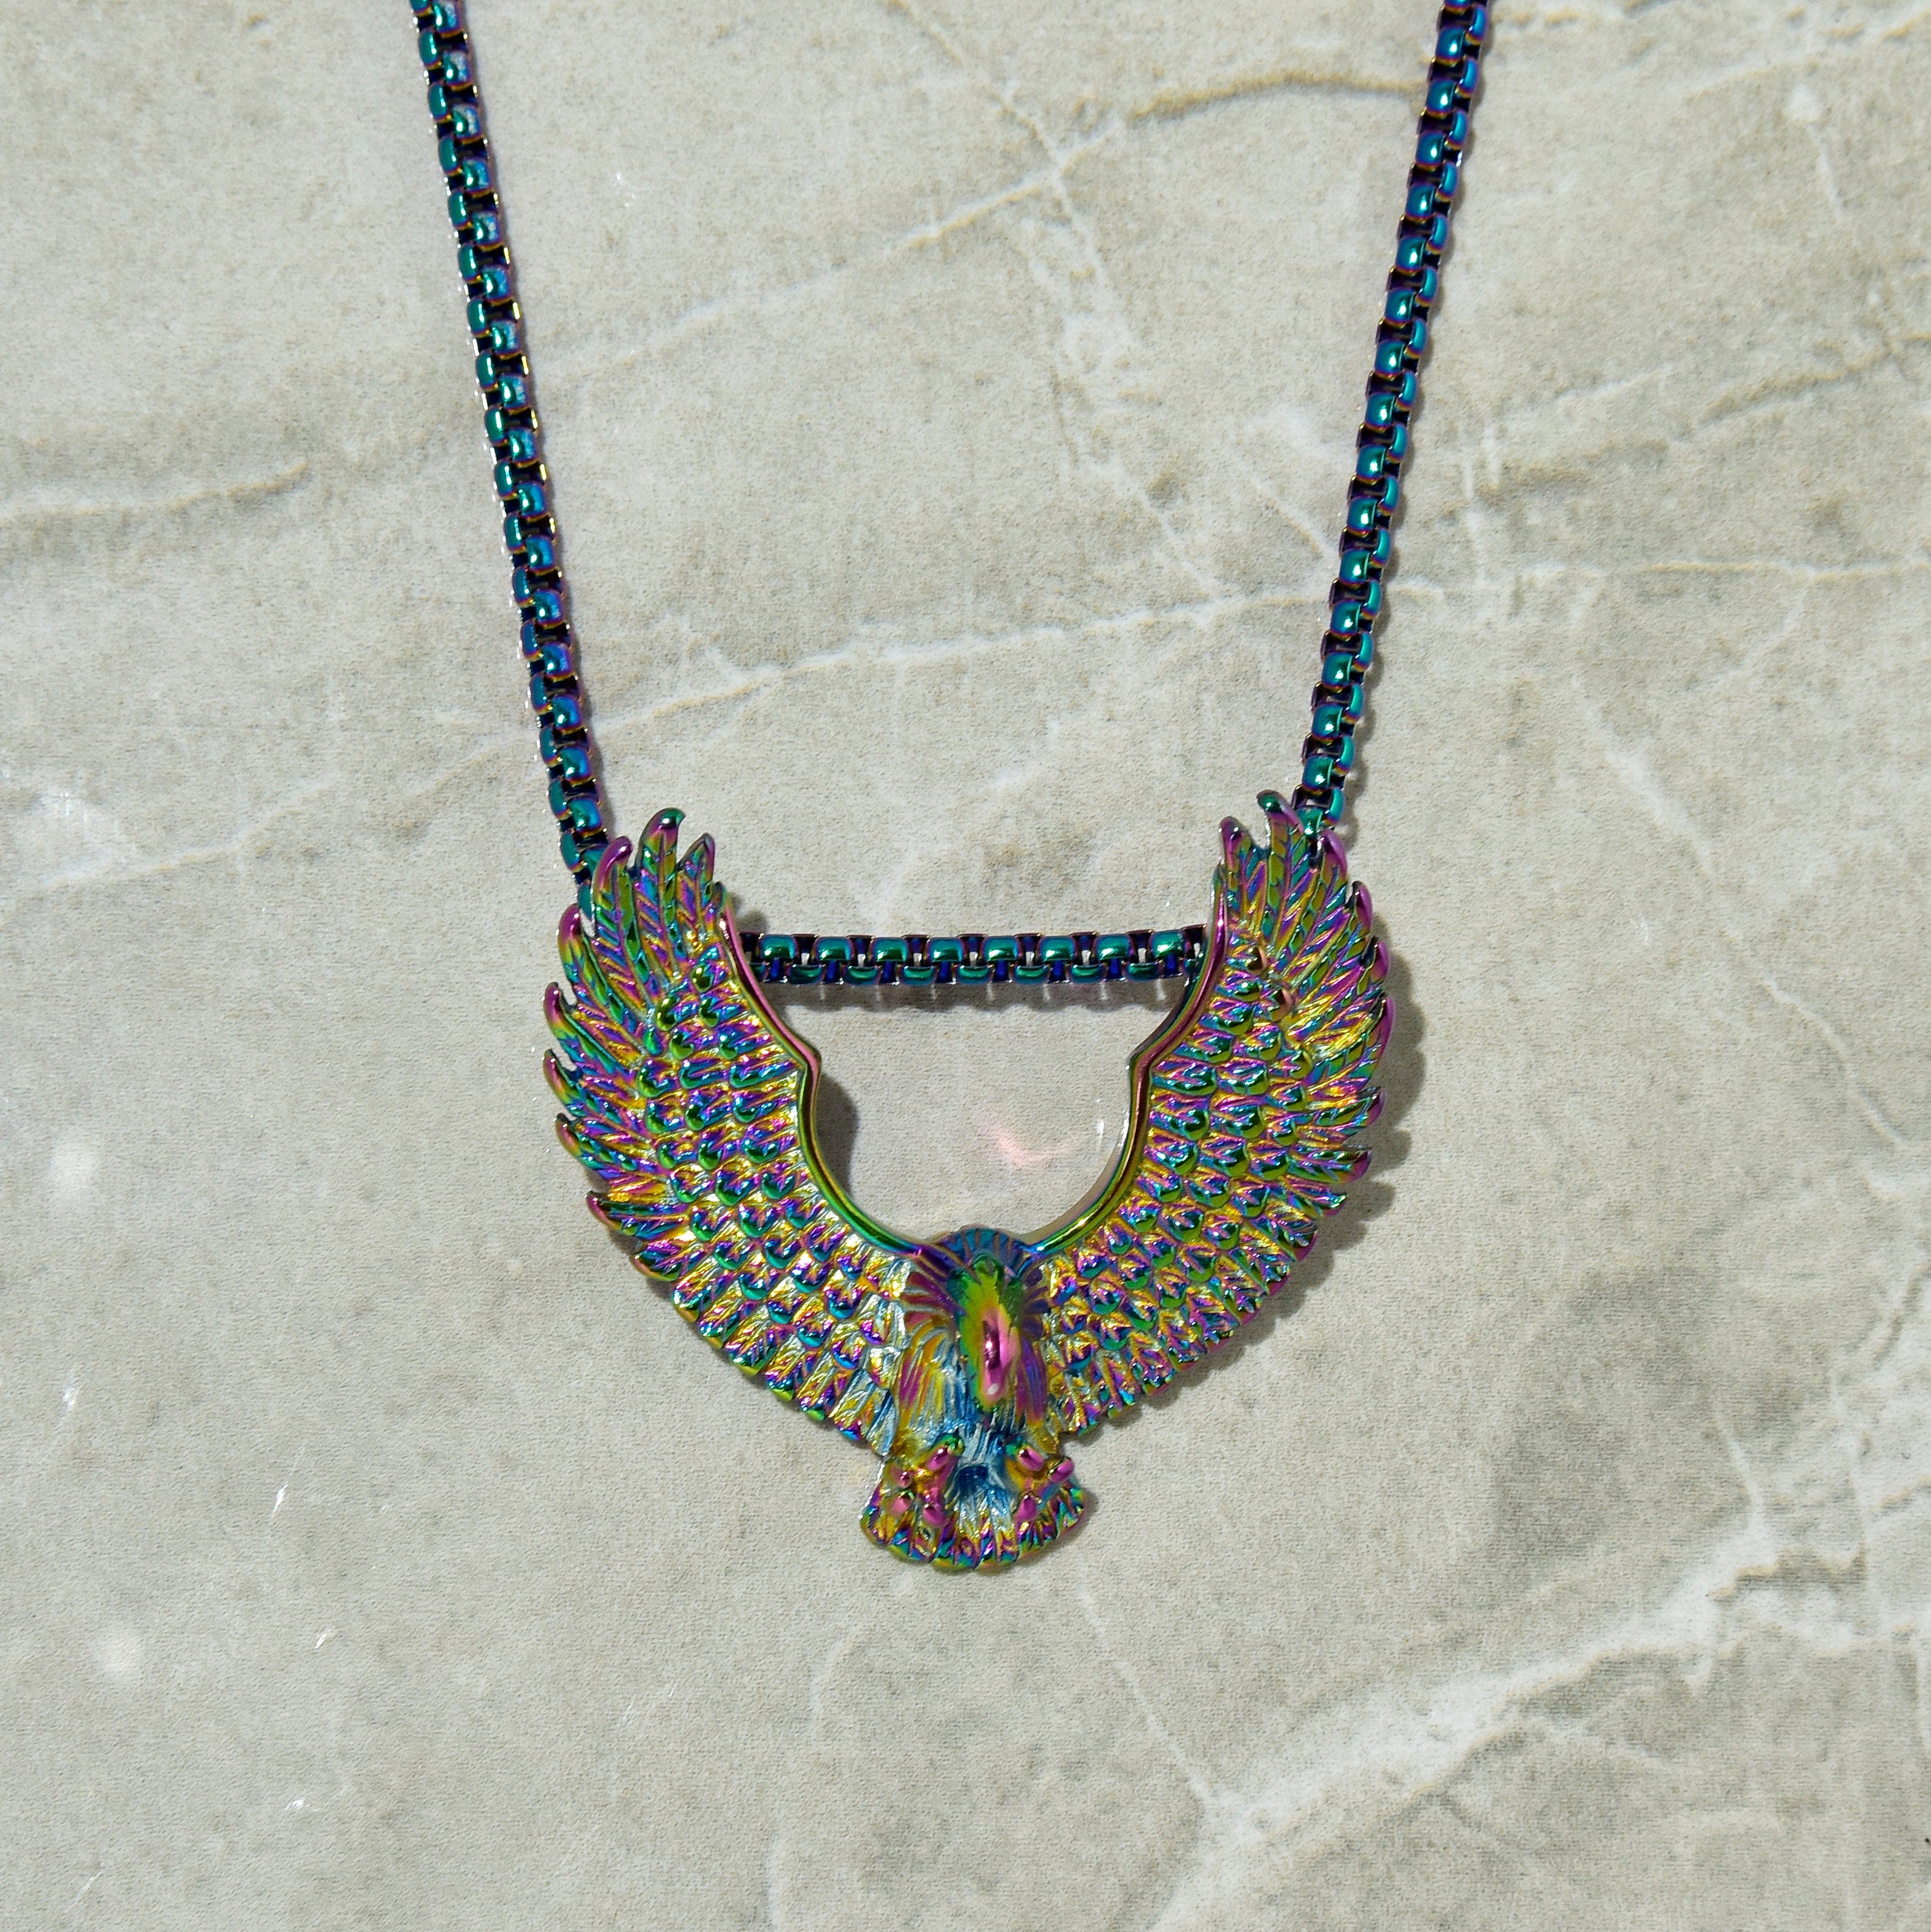 Kalifano Steel Hearts Jewelry Aurora Borealis Eagle Steel Hearts Necklace SHN509-AB